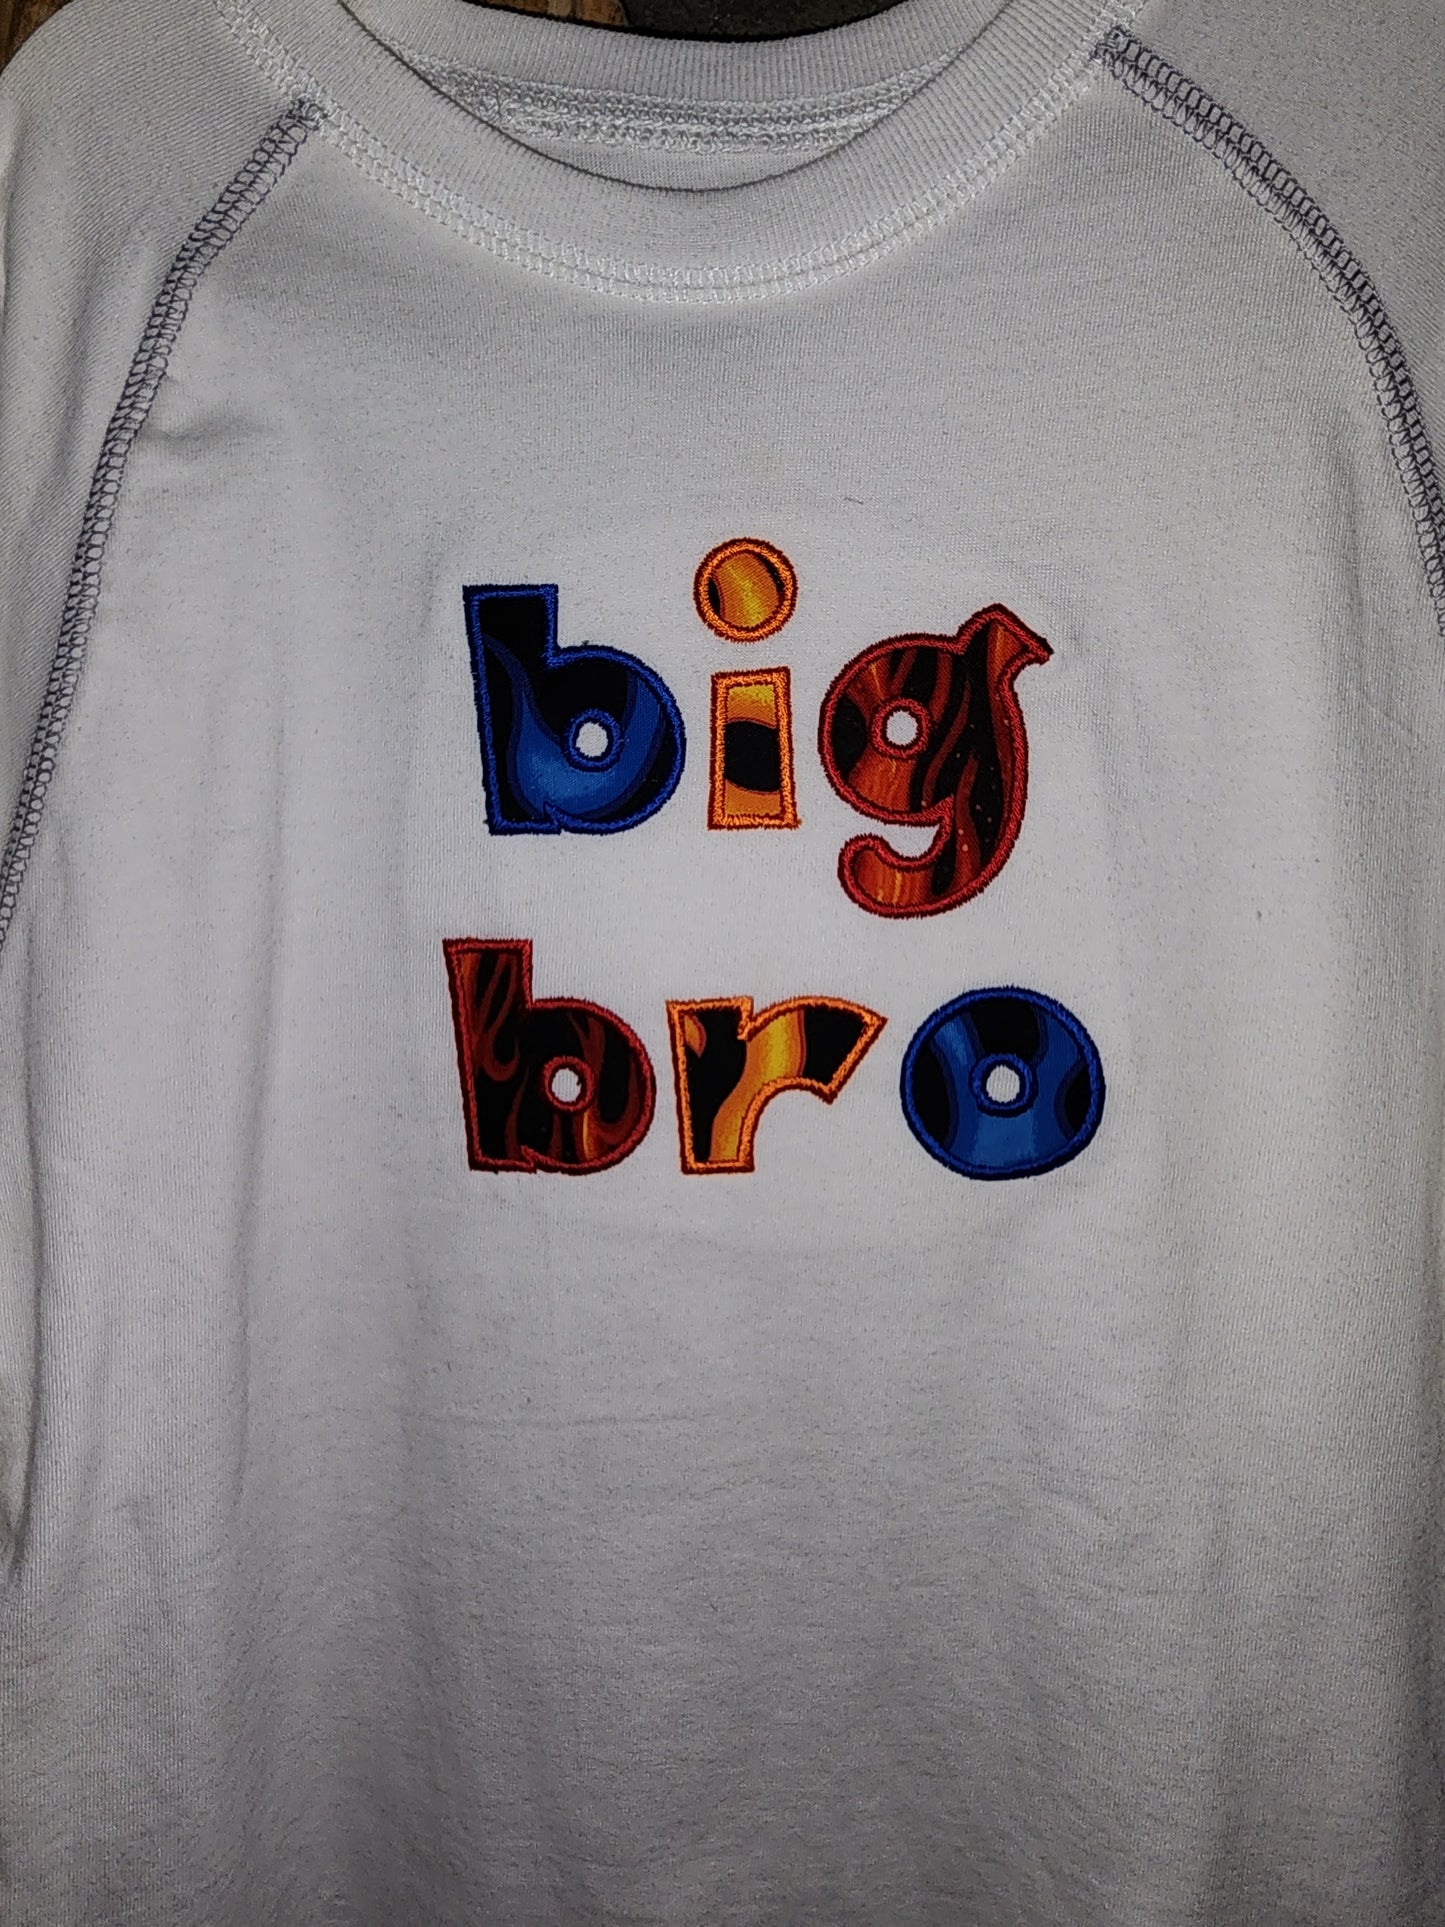 Big Bro on Fire Shirt Size 4/5